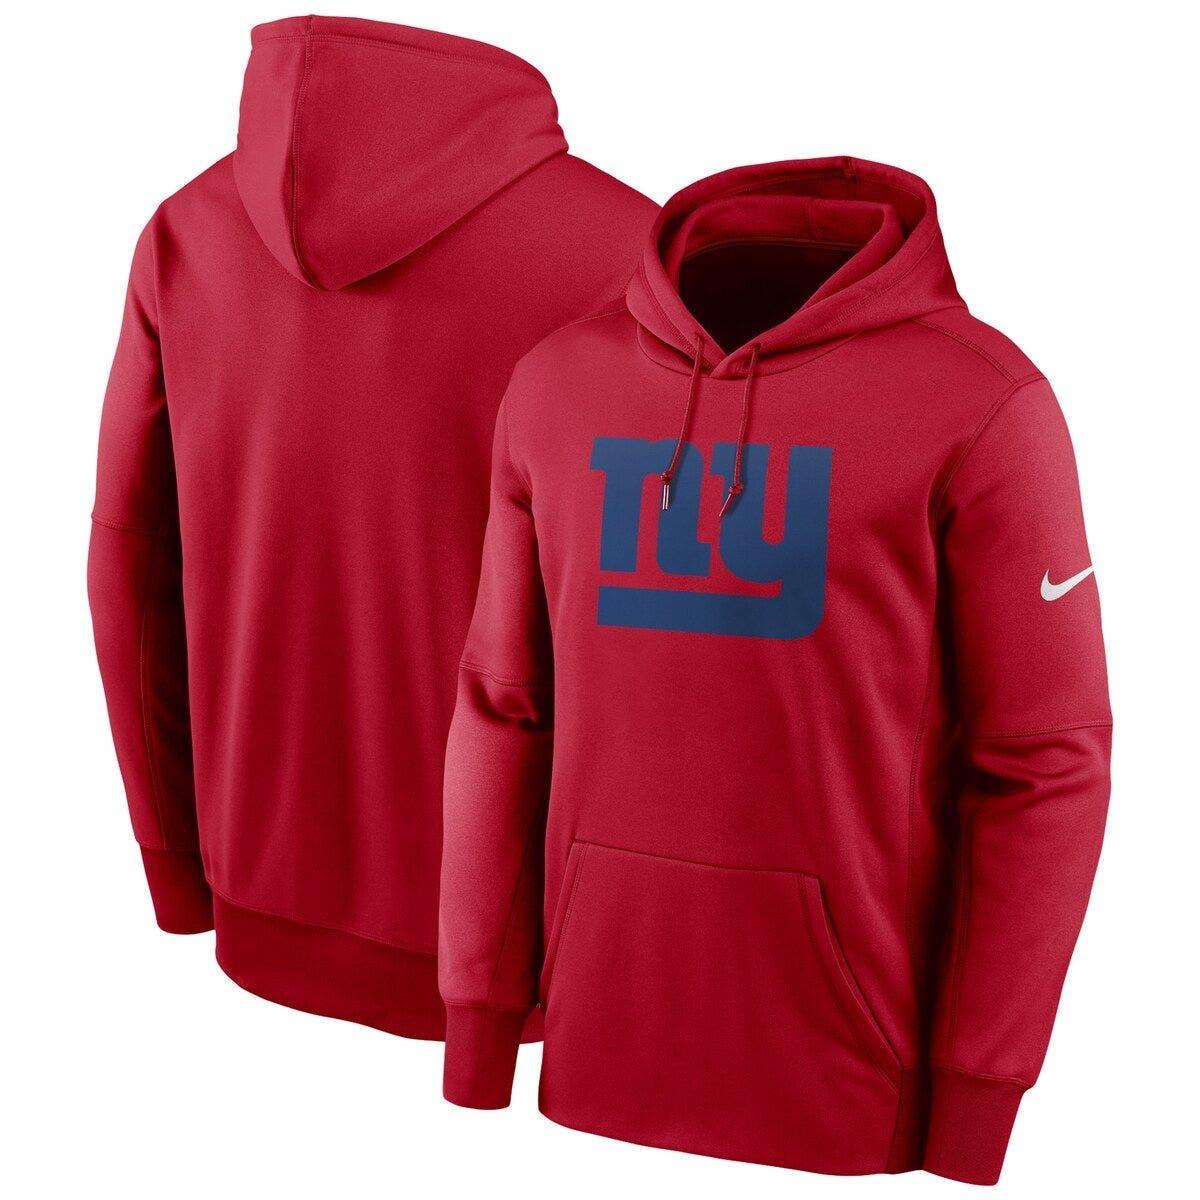 Nike Throwback Stack (NFL New York Giants) Men's Pullover Jacket.